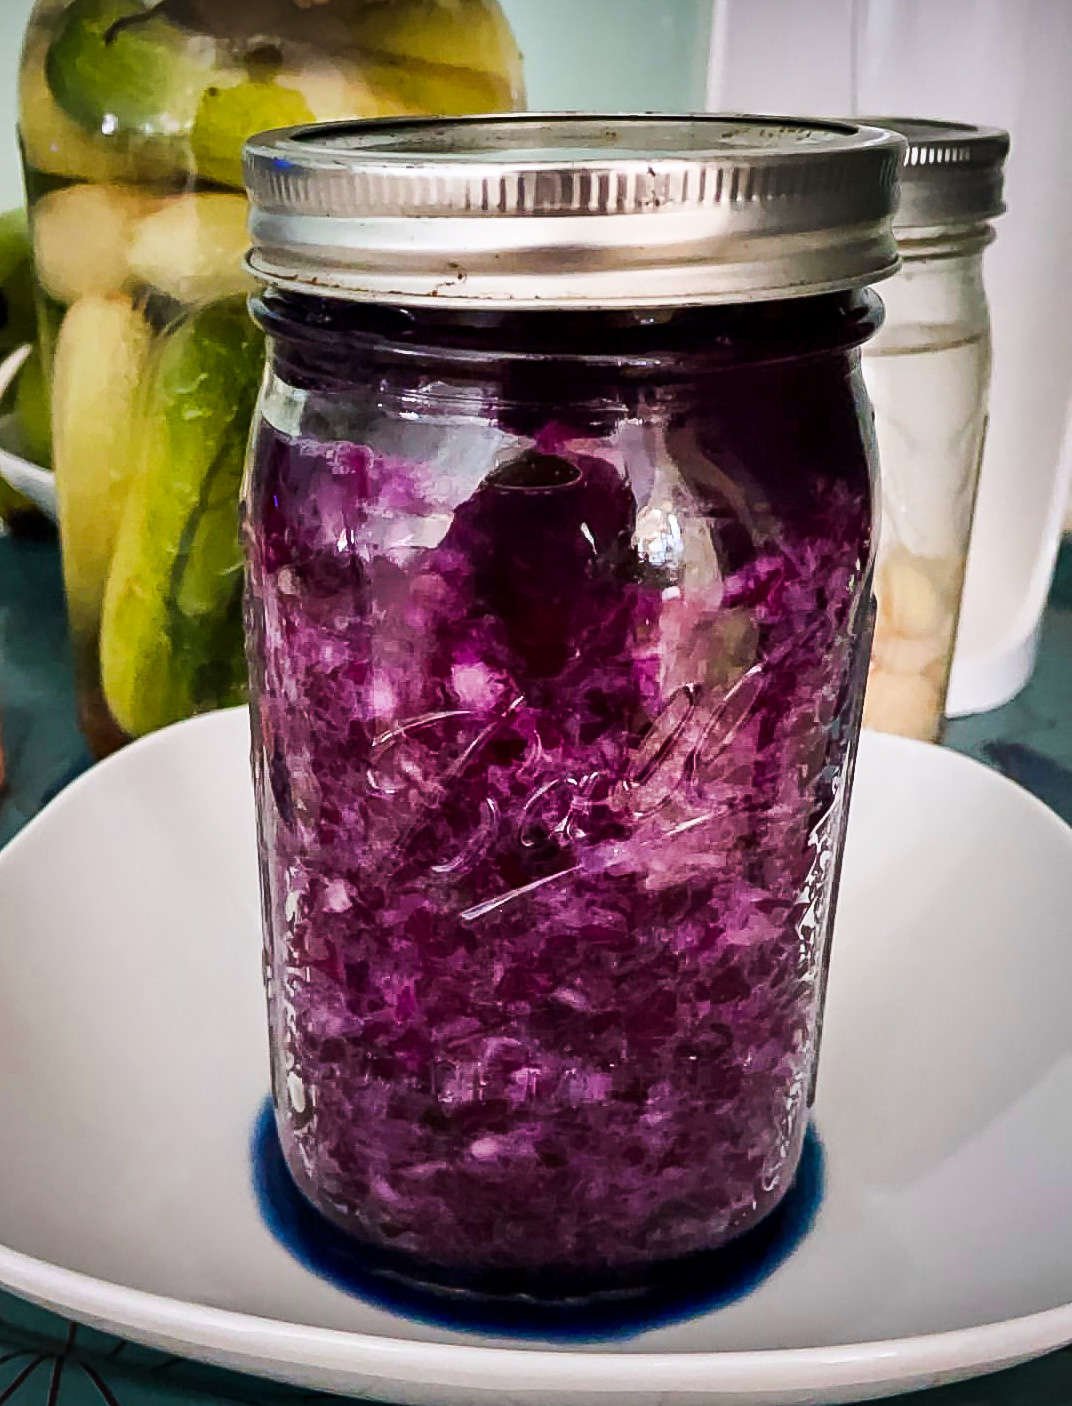 Sauerkraut/Fermented Cabbage